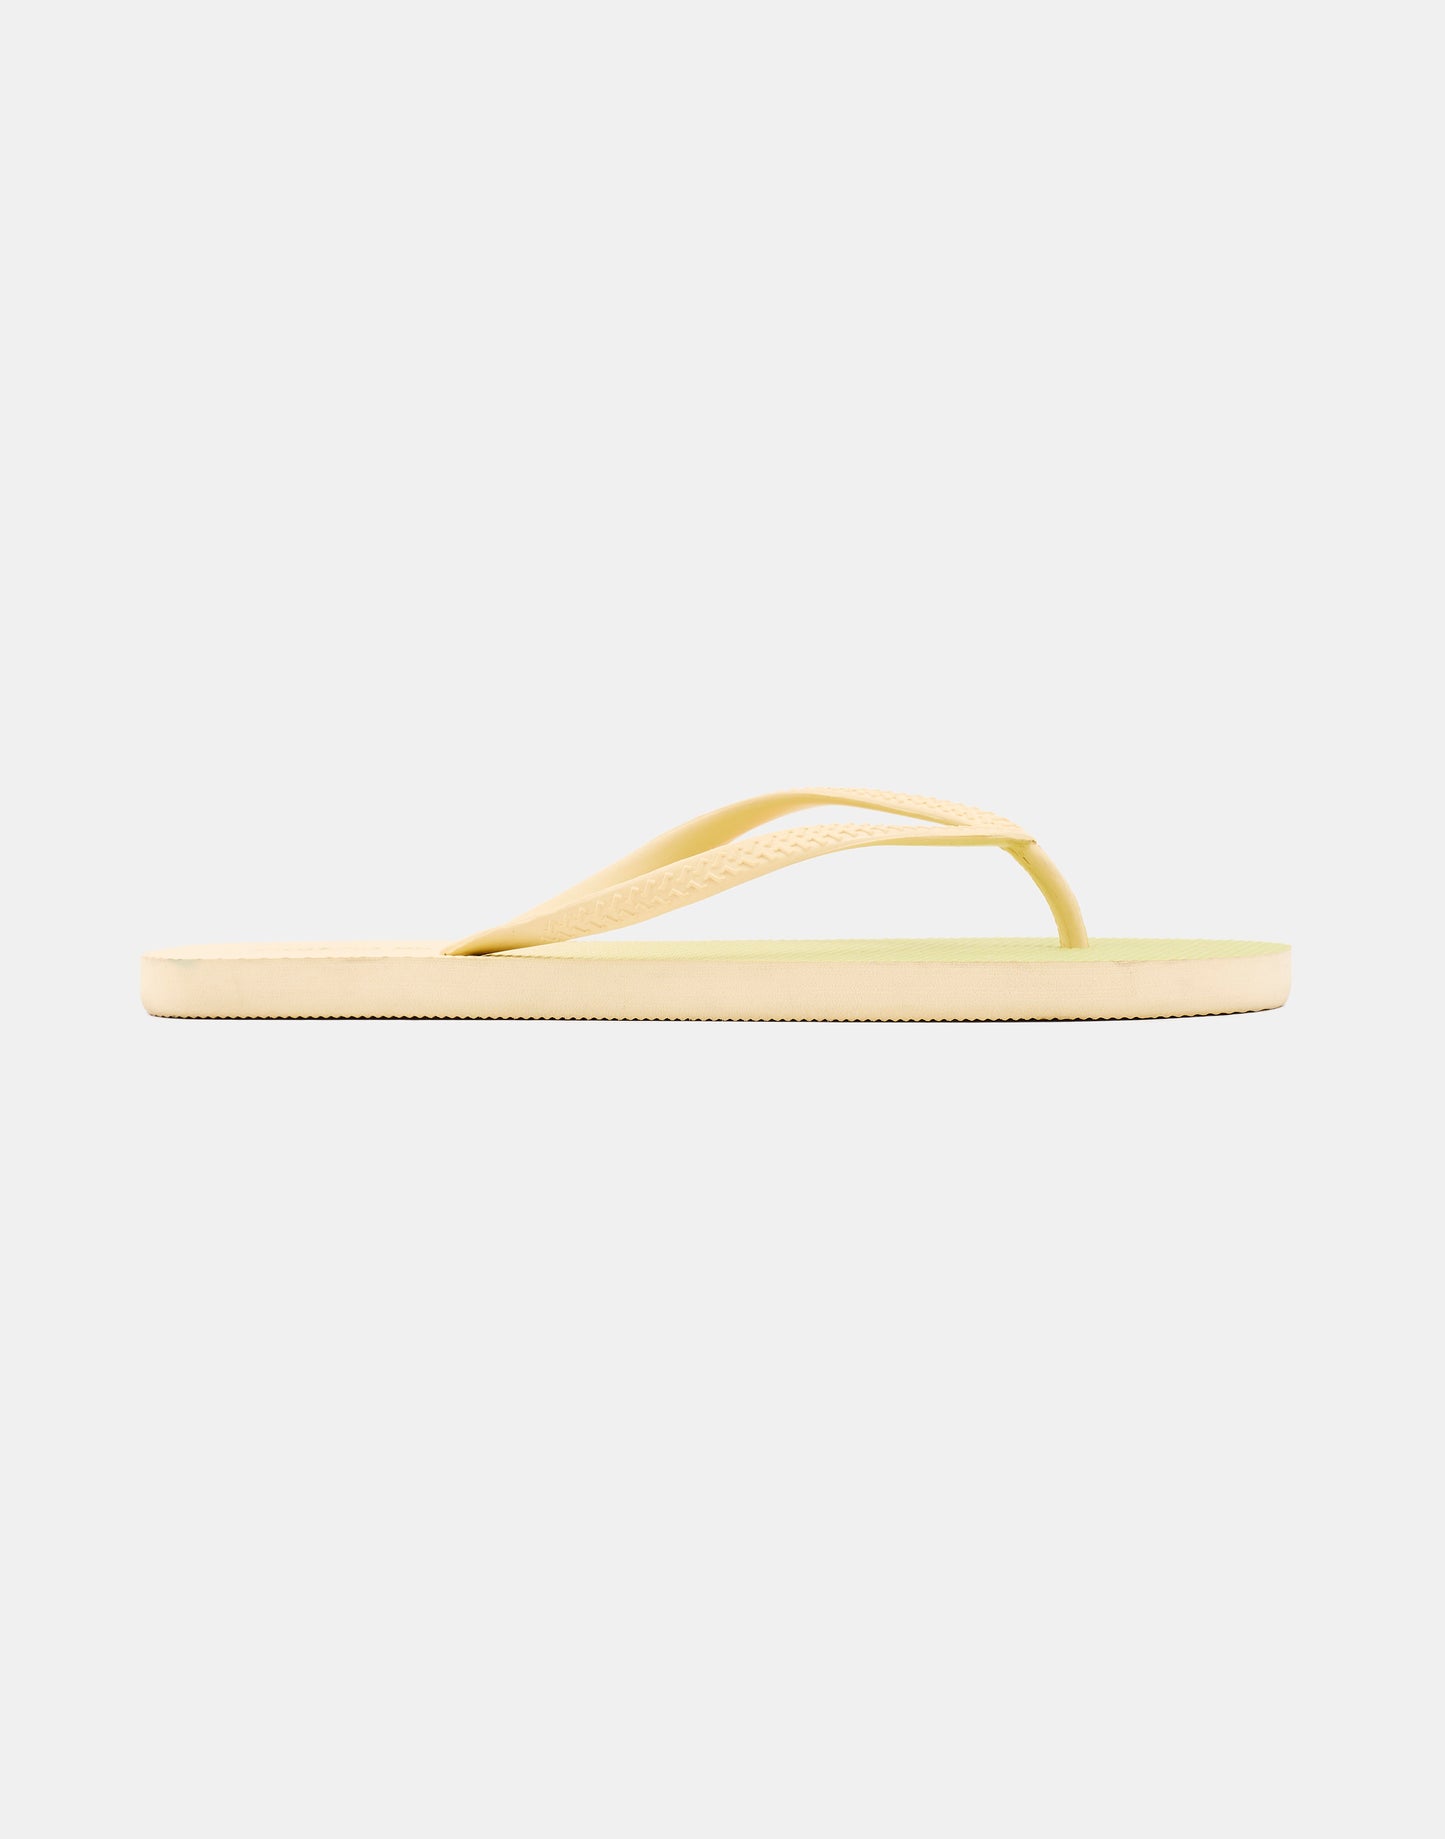 Flip-Flop sandal